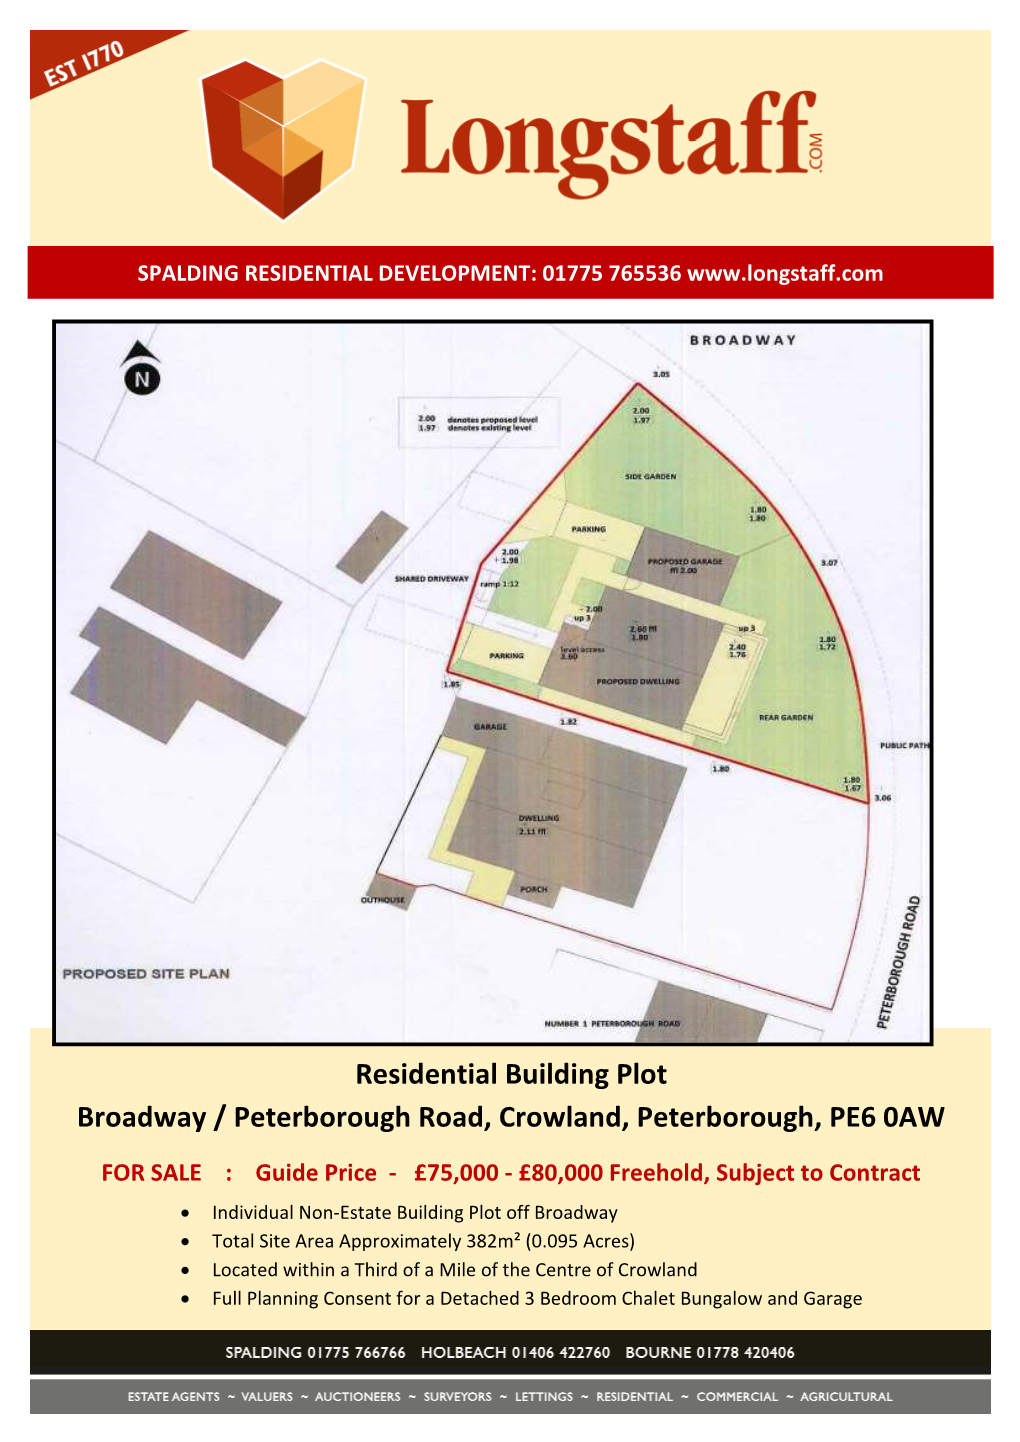 Residential Building Plot Broadway / Peterborough Road, Crowland, Peterborough, PE6 0AW